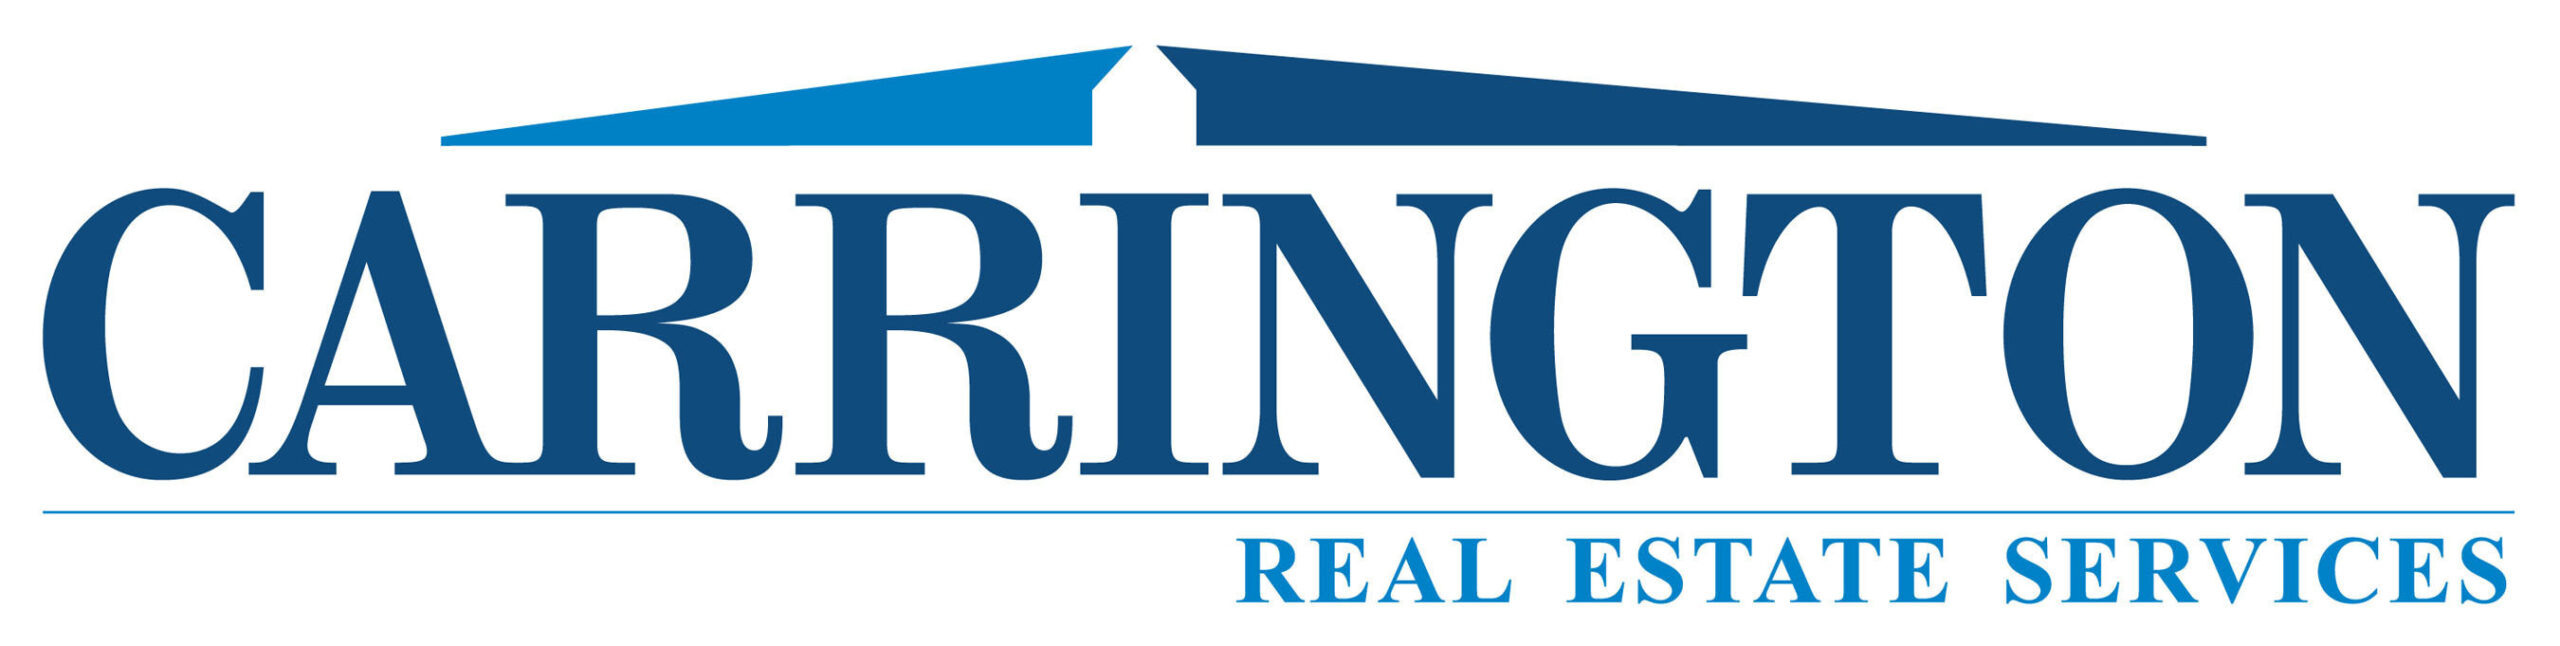 www.carringtonrealestate.com.  (PRNewsFoto/Carrington Real Estate Services, LLC)